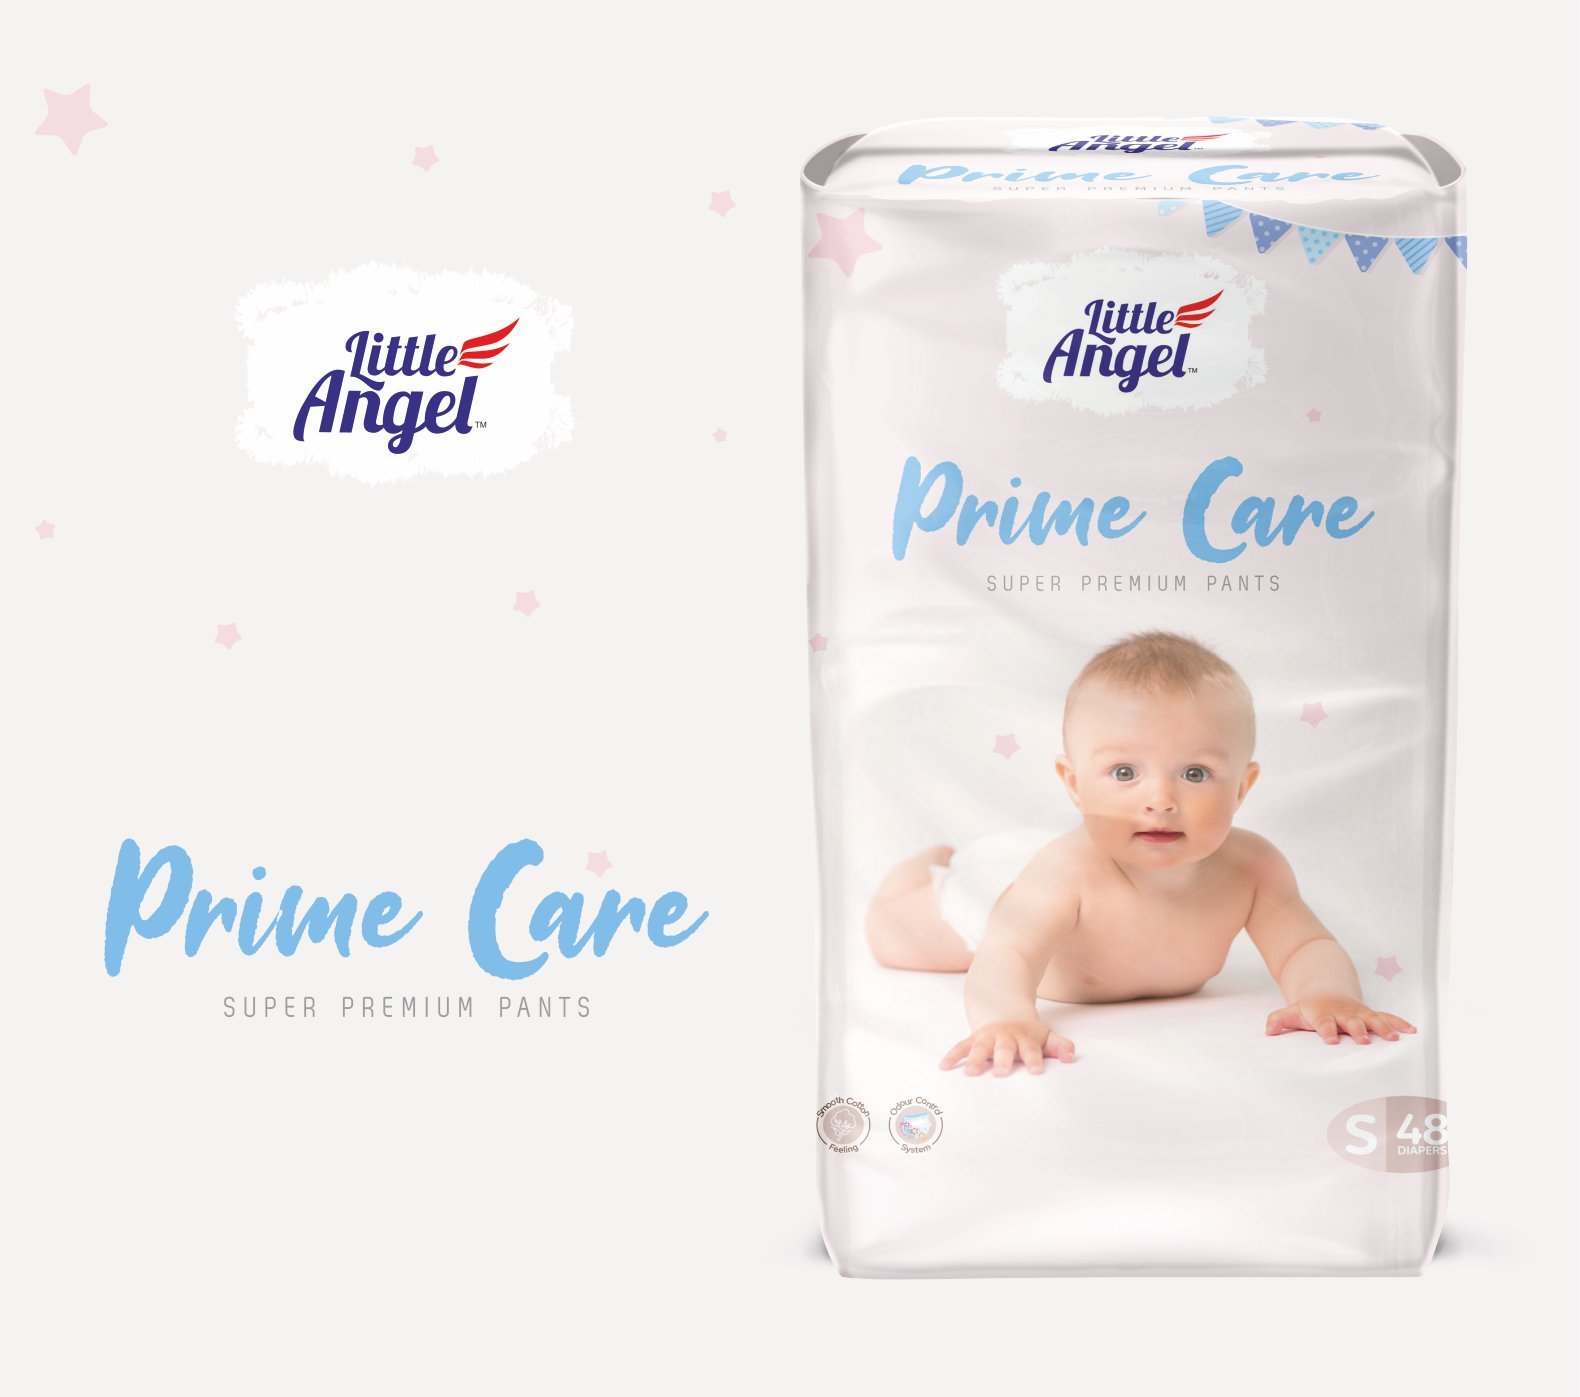 Little Angel Packaging Design - Spartan Branding